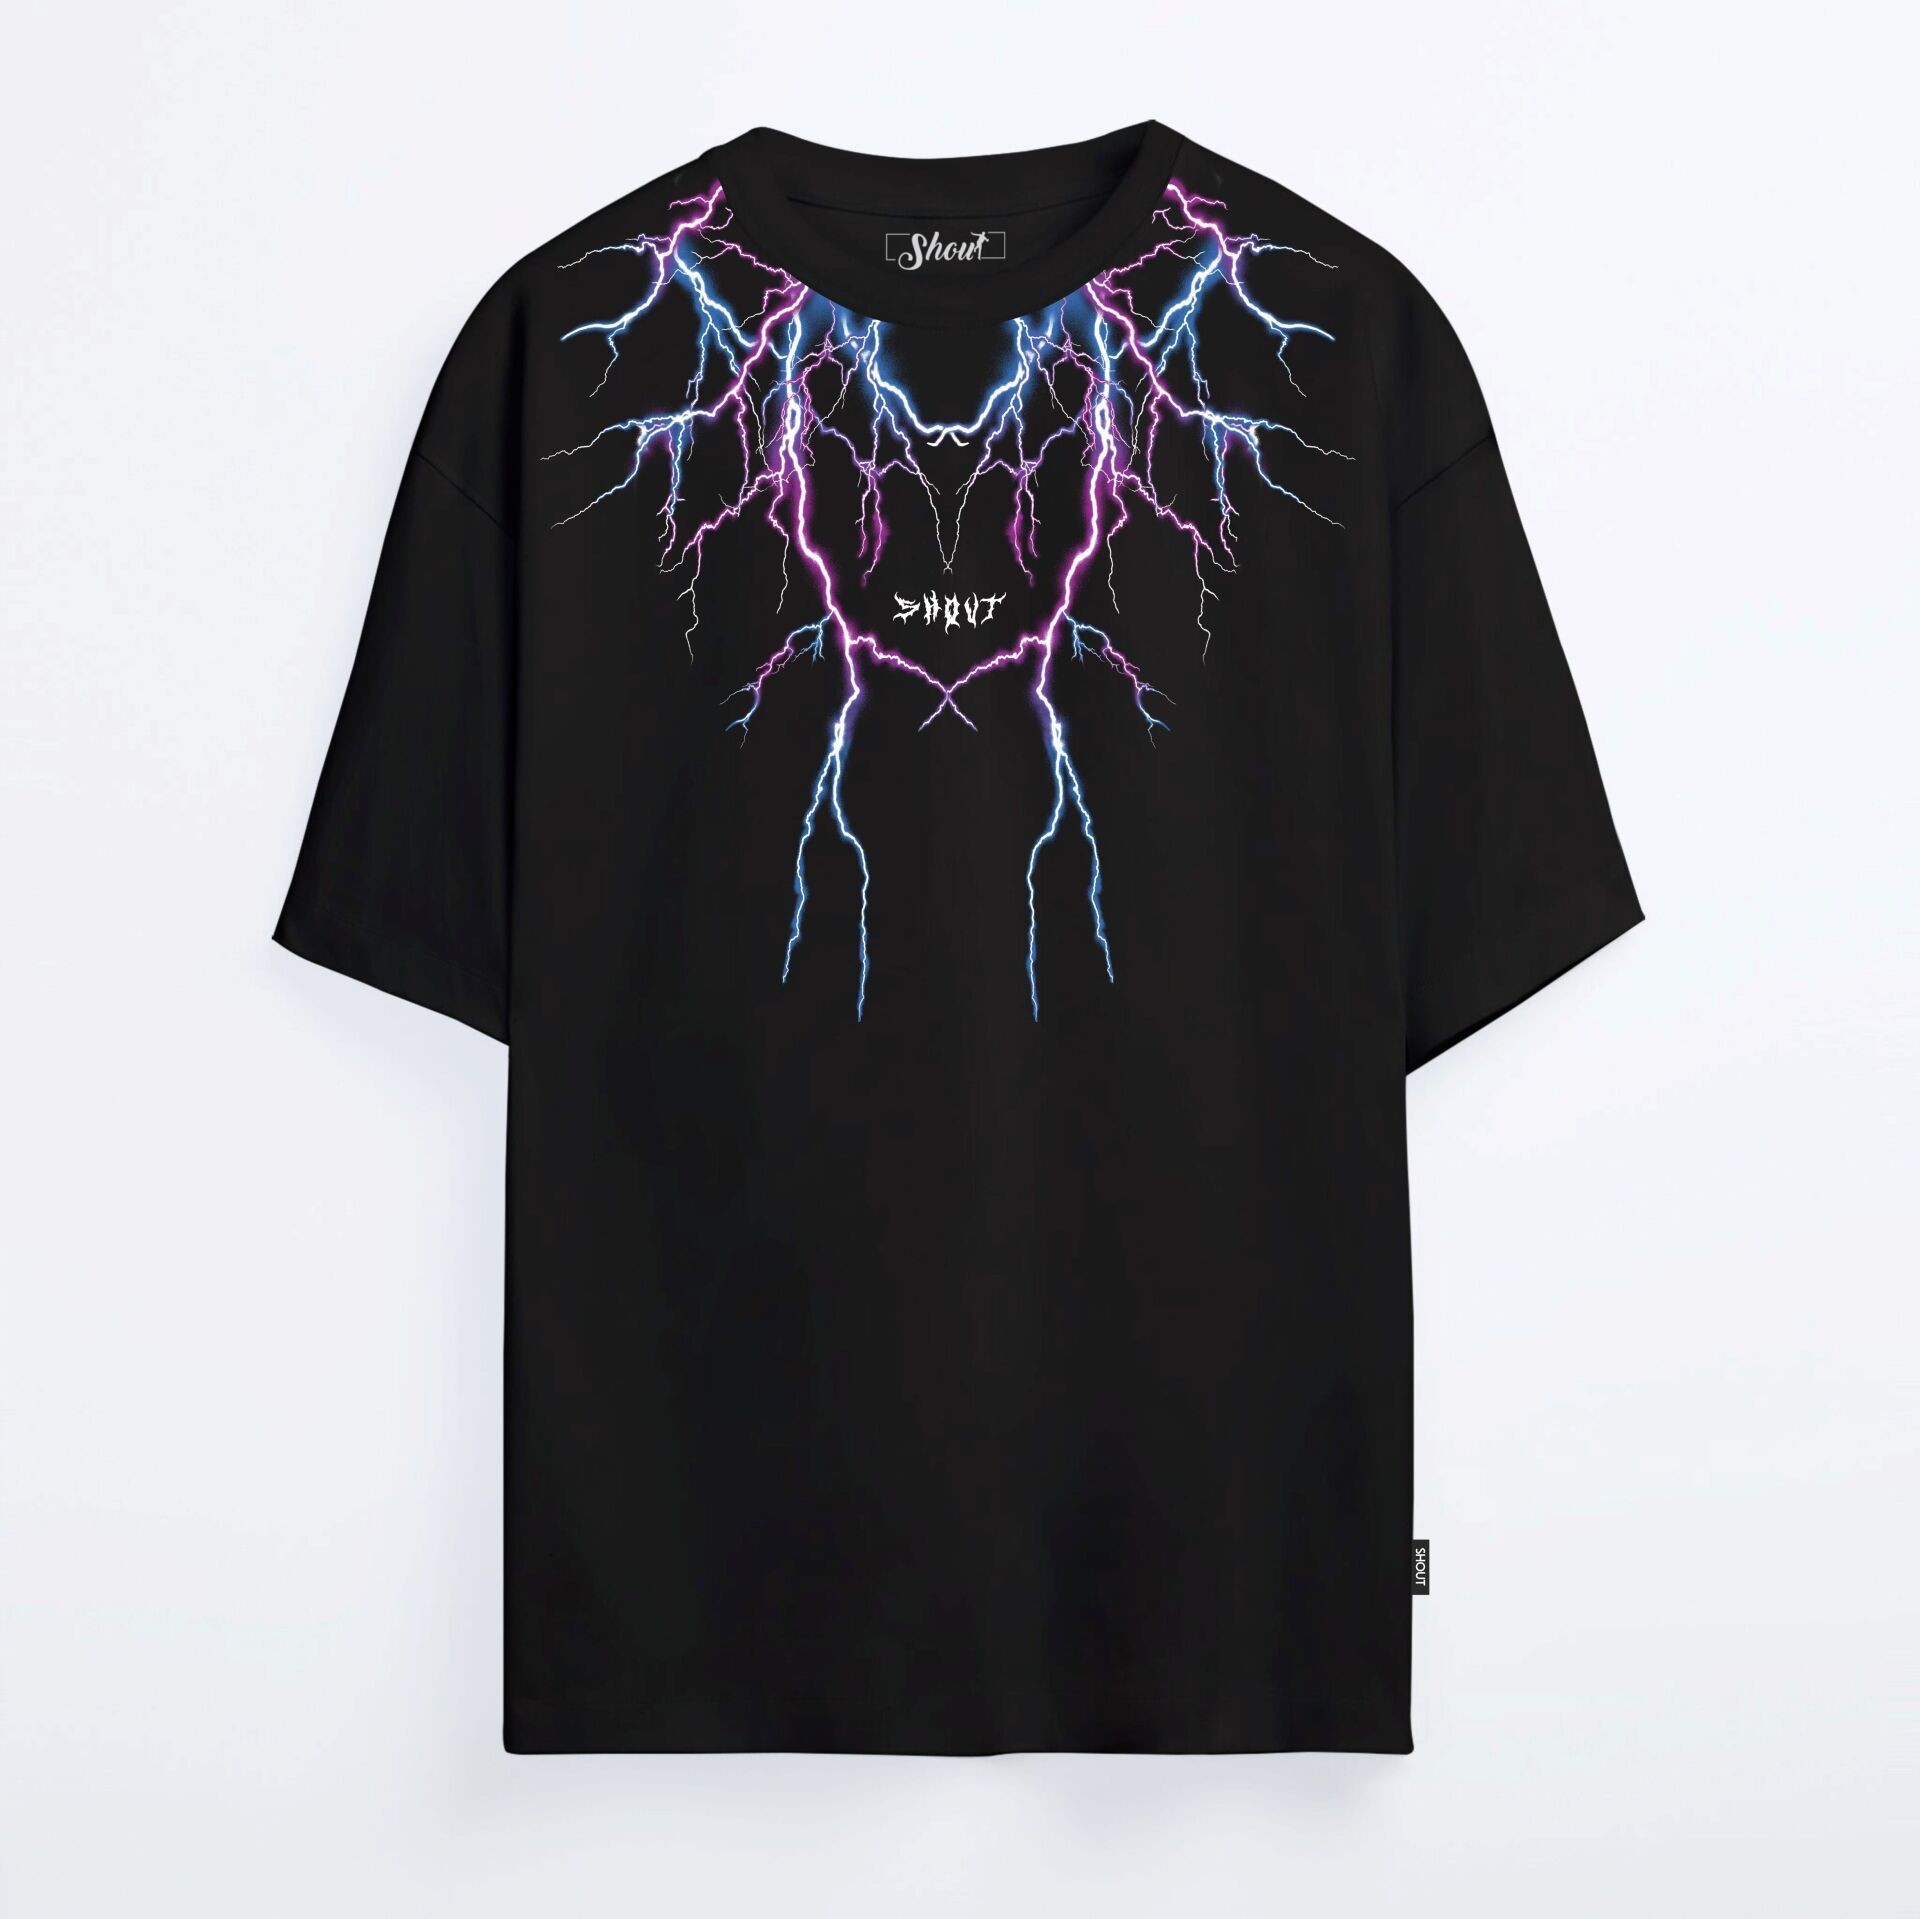 Shout Oversize Limited Edition New Lightning Unisex T-Shirt